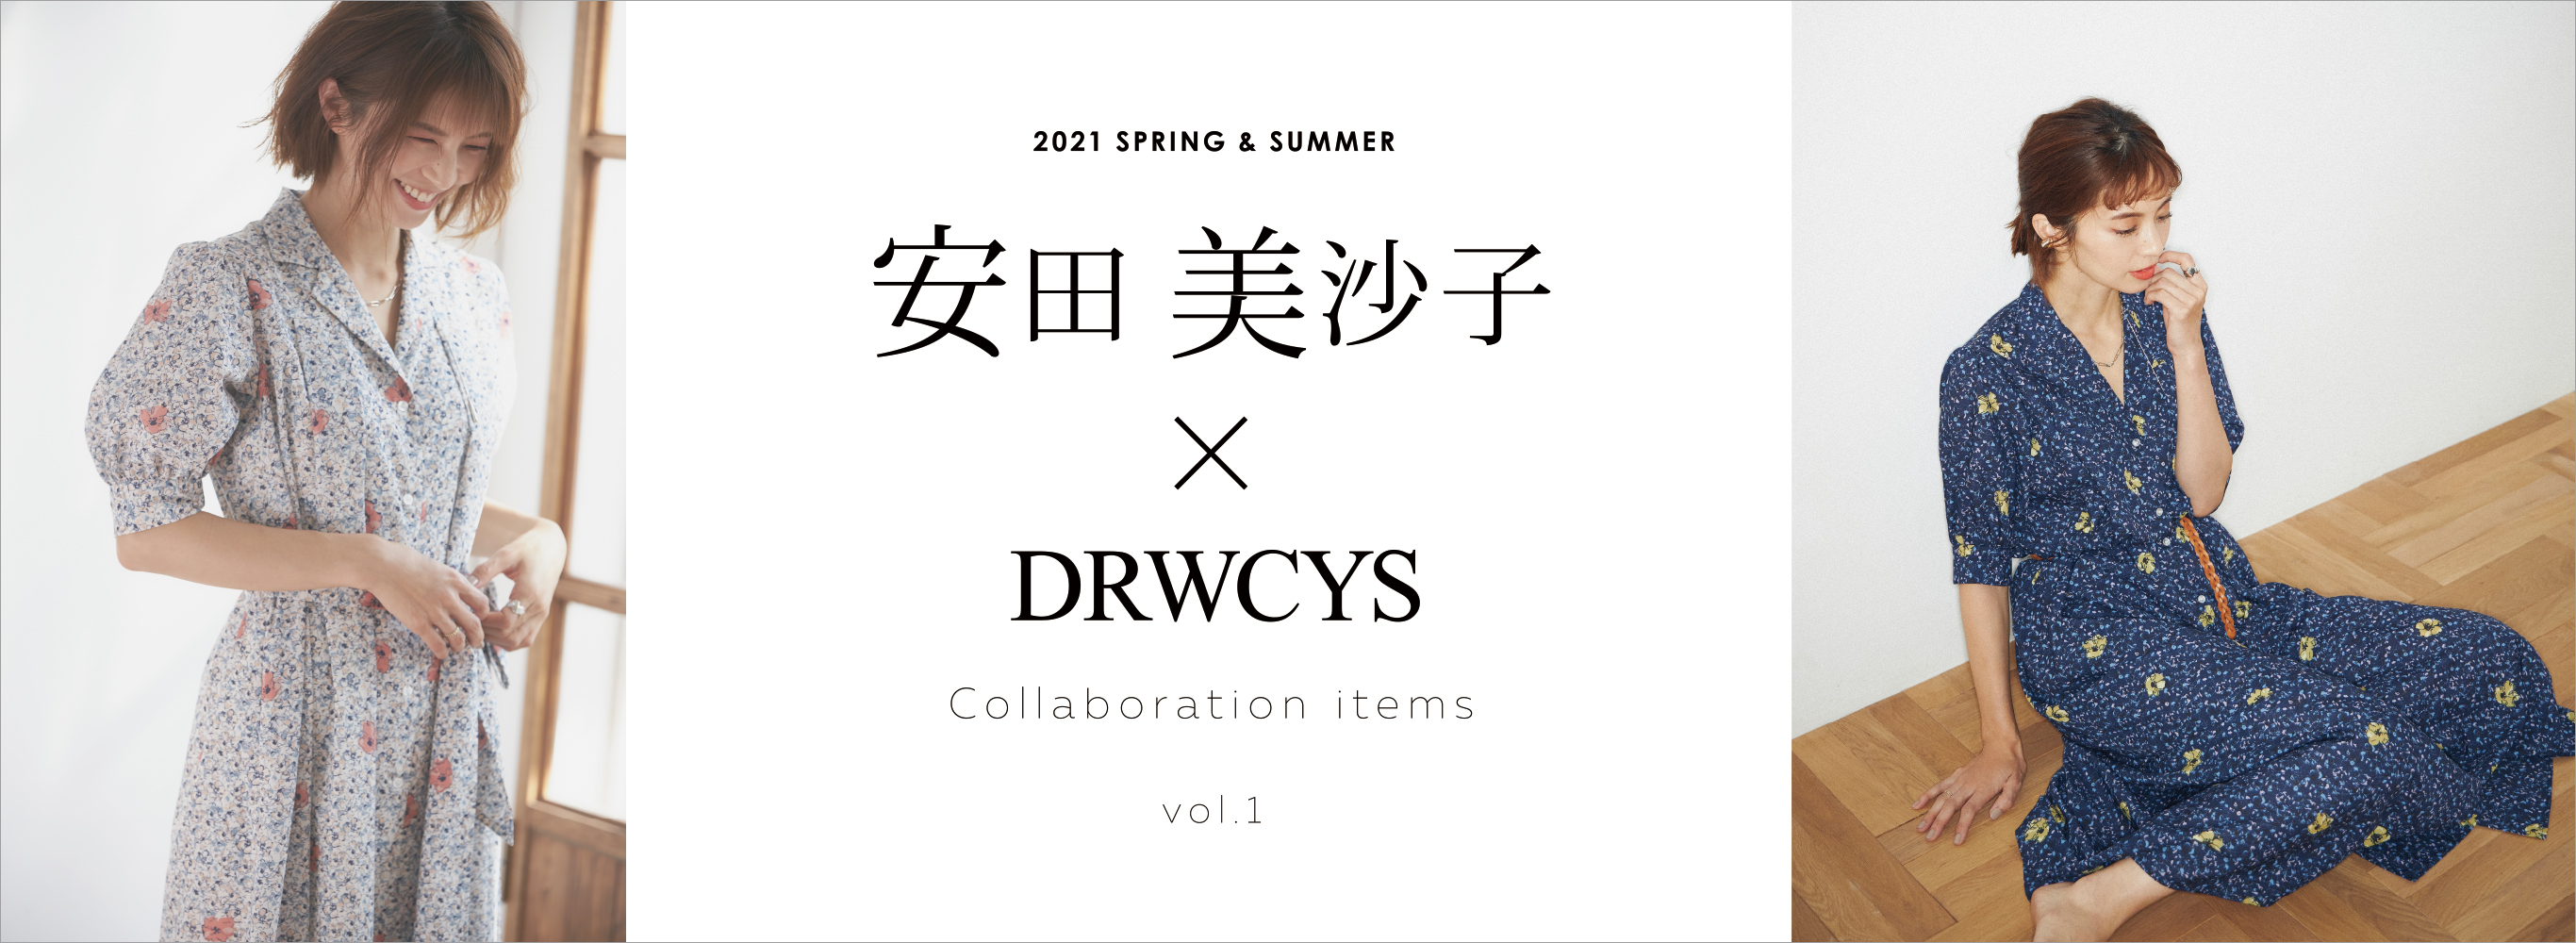 cq~DRWCYS Collaboration items